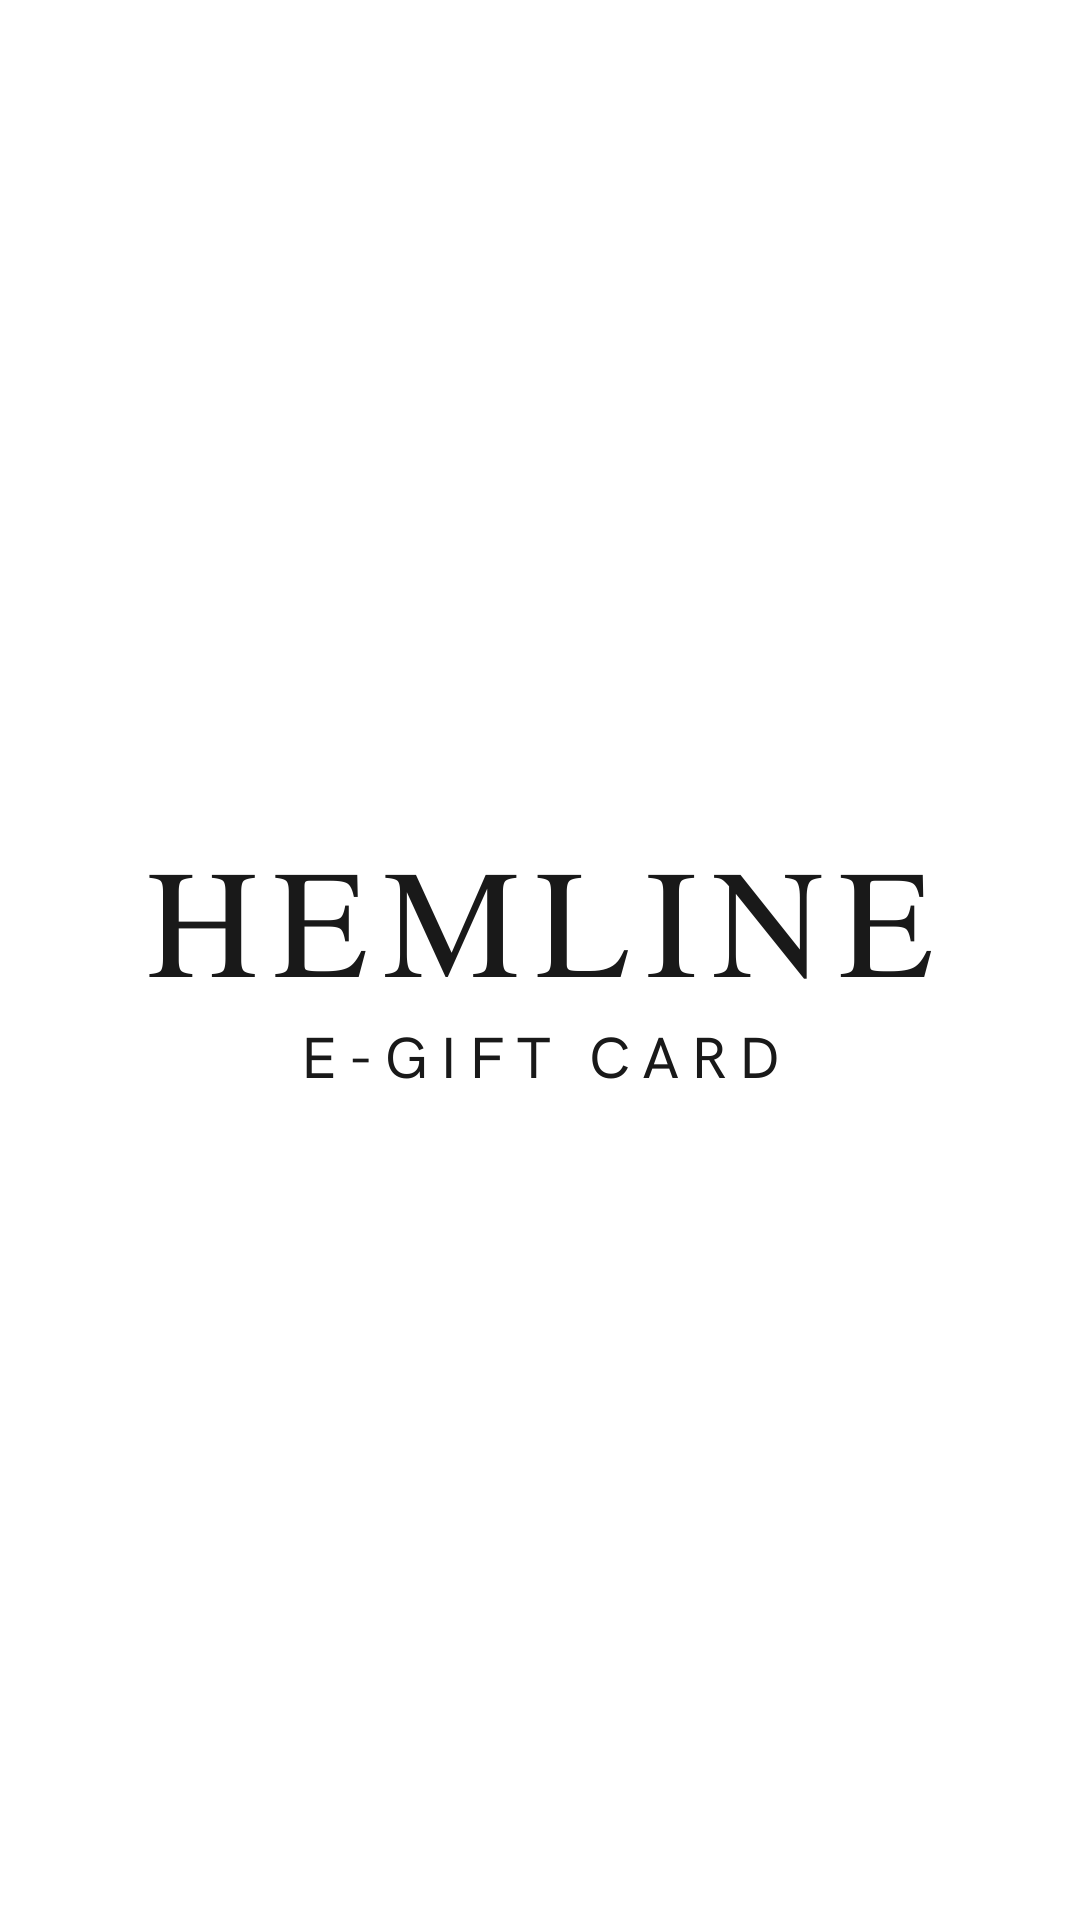 Hemline Metairie E-Gift Card